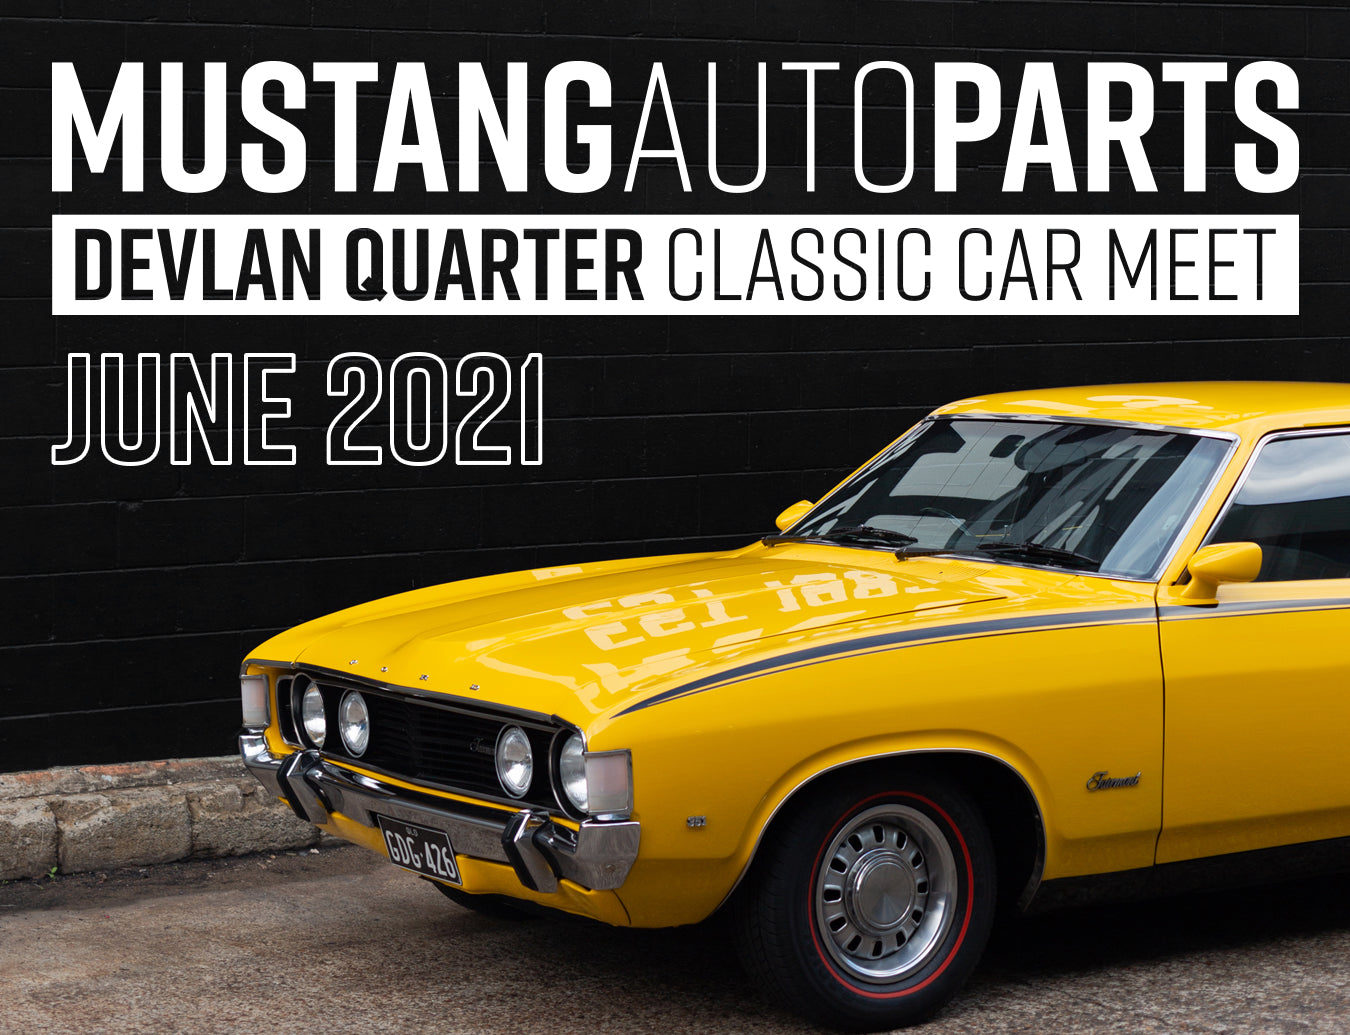 Devlan Quarter Classic Car Meet - June 2021